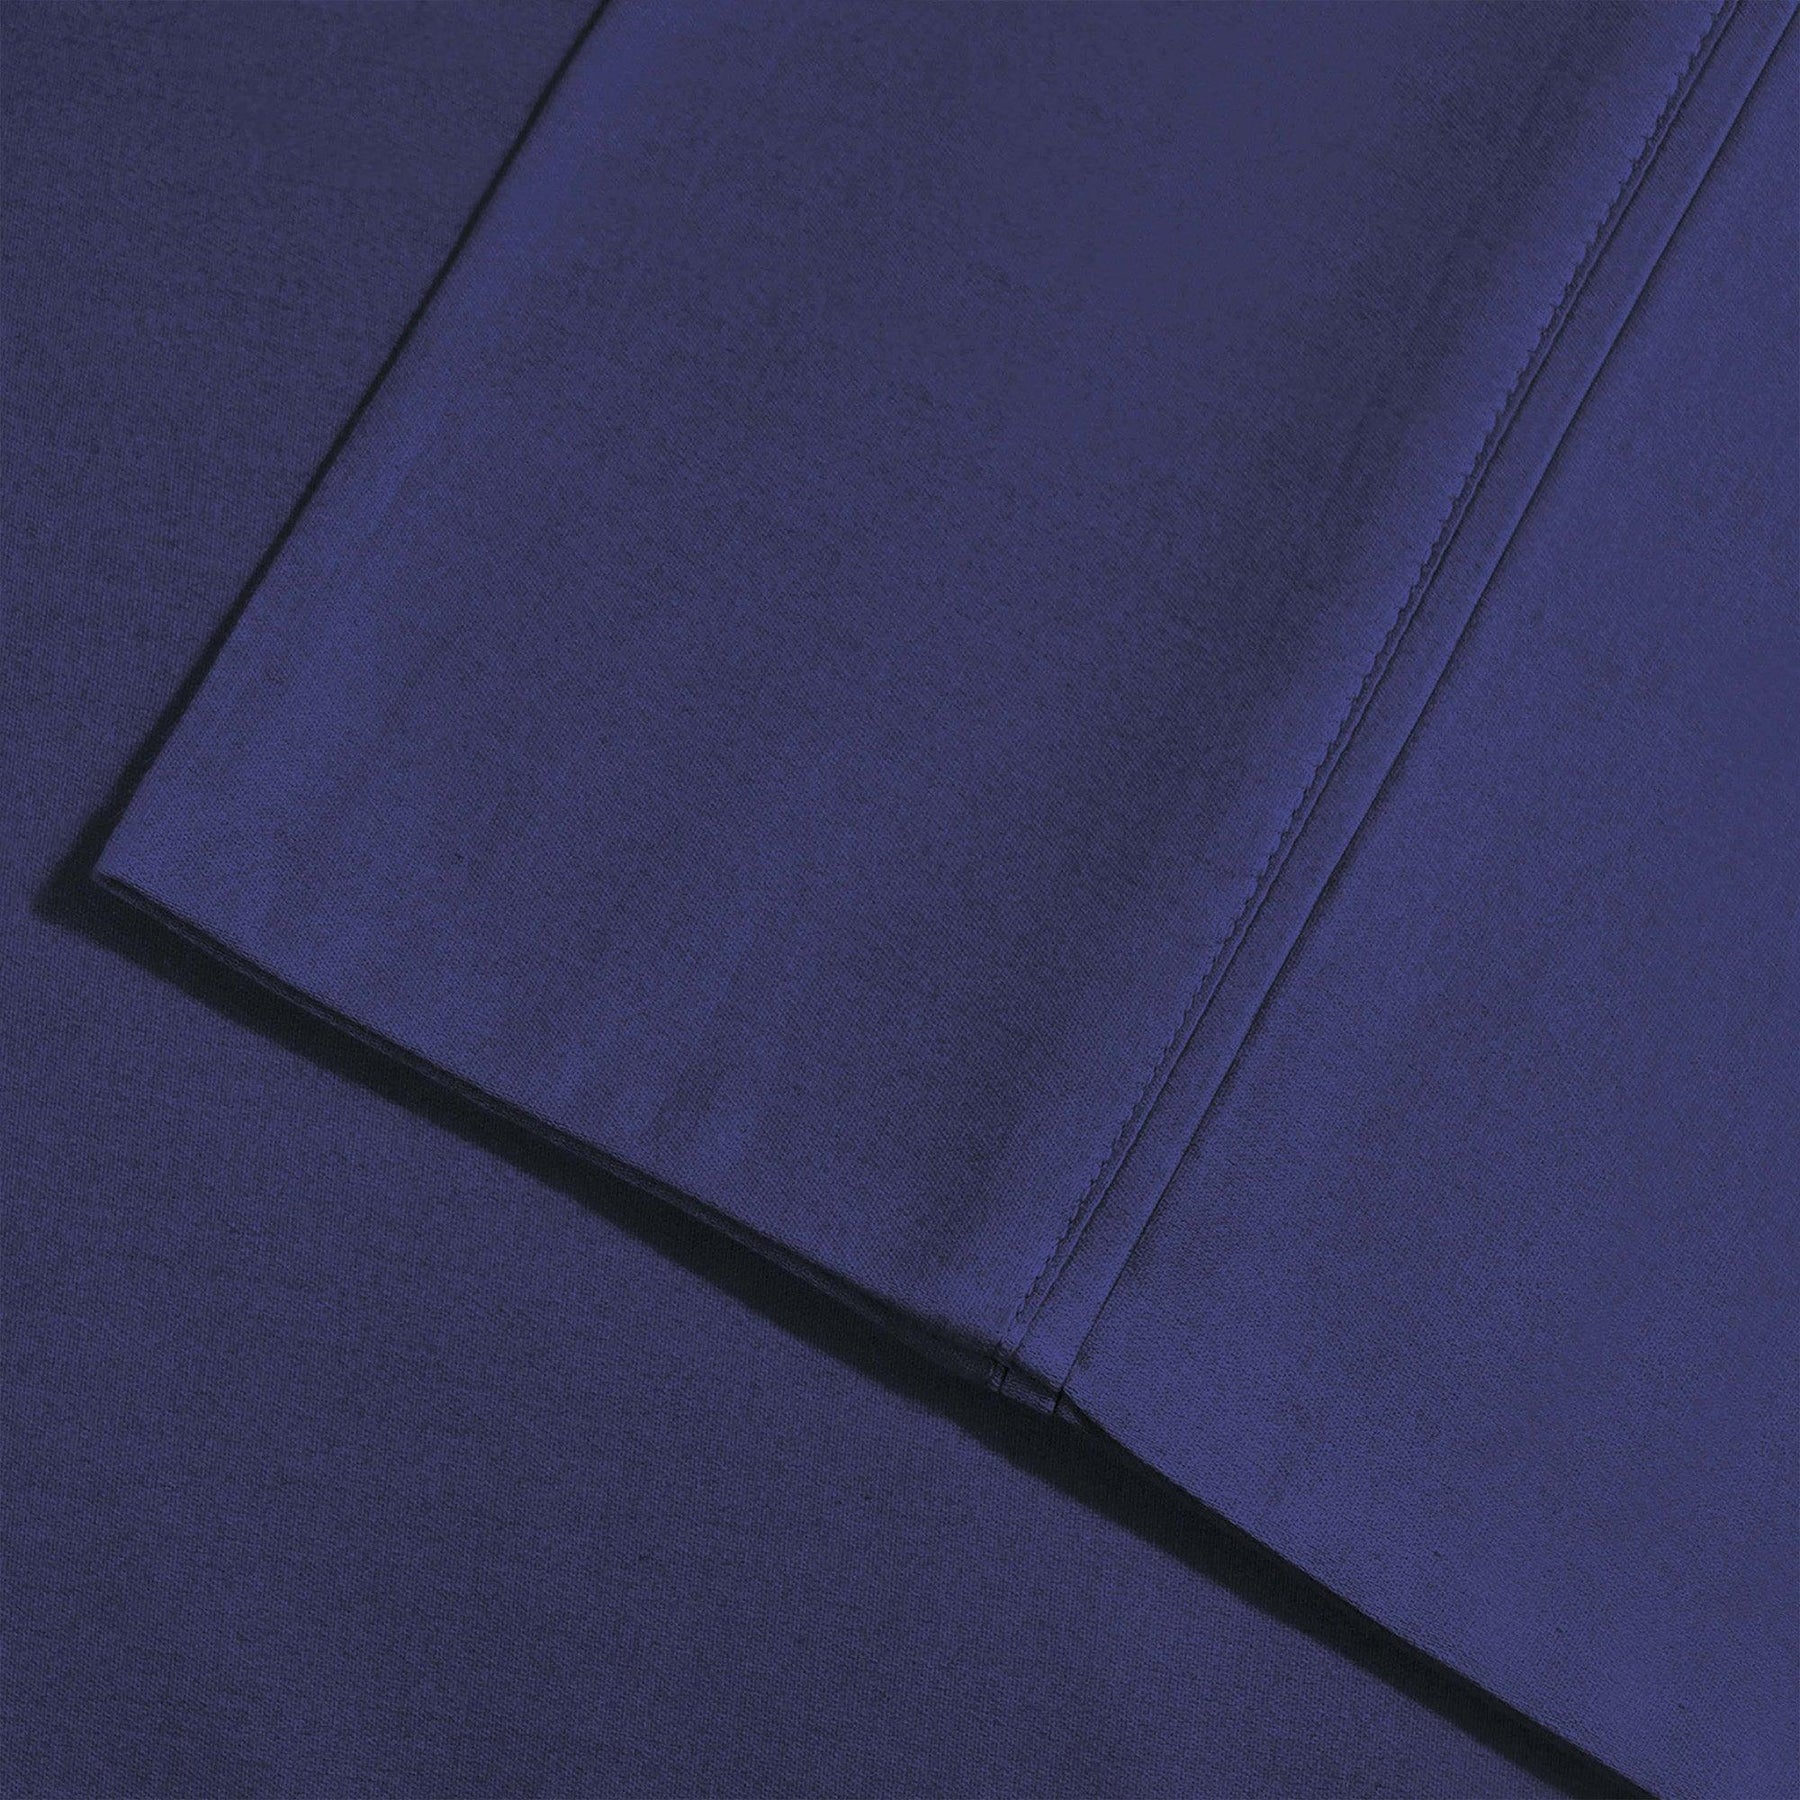  Superior Premium Plush Solid Deep Pocket Cotton Blend Bed Sheet Set -  Navy Blue